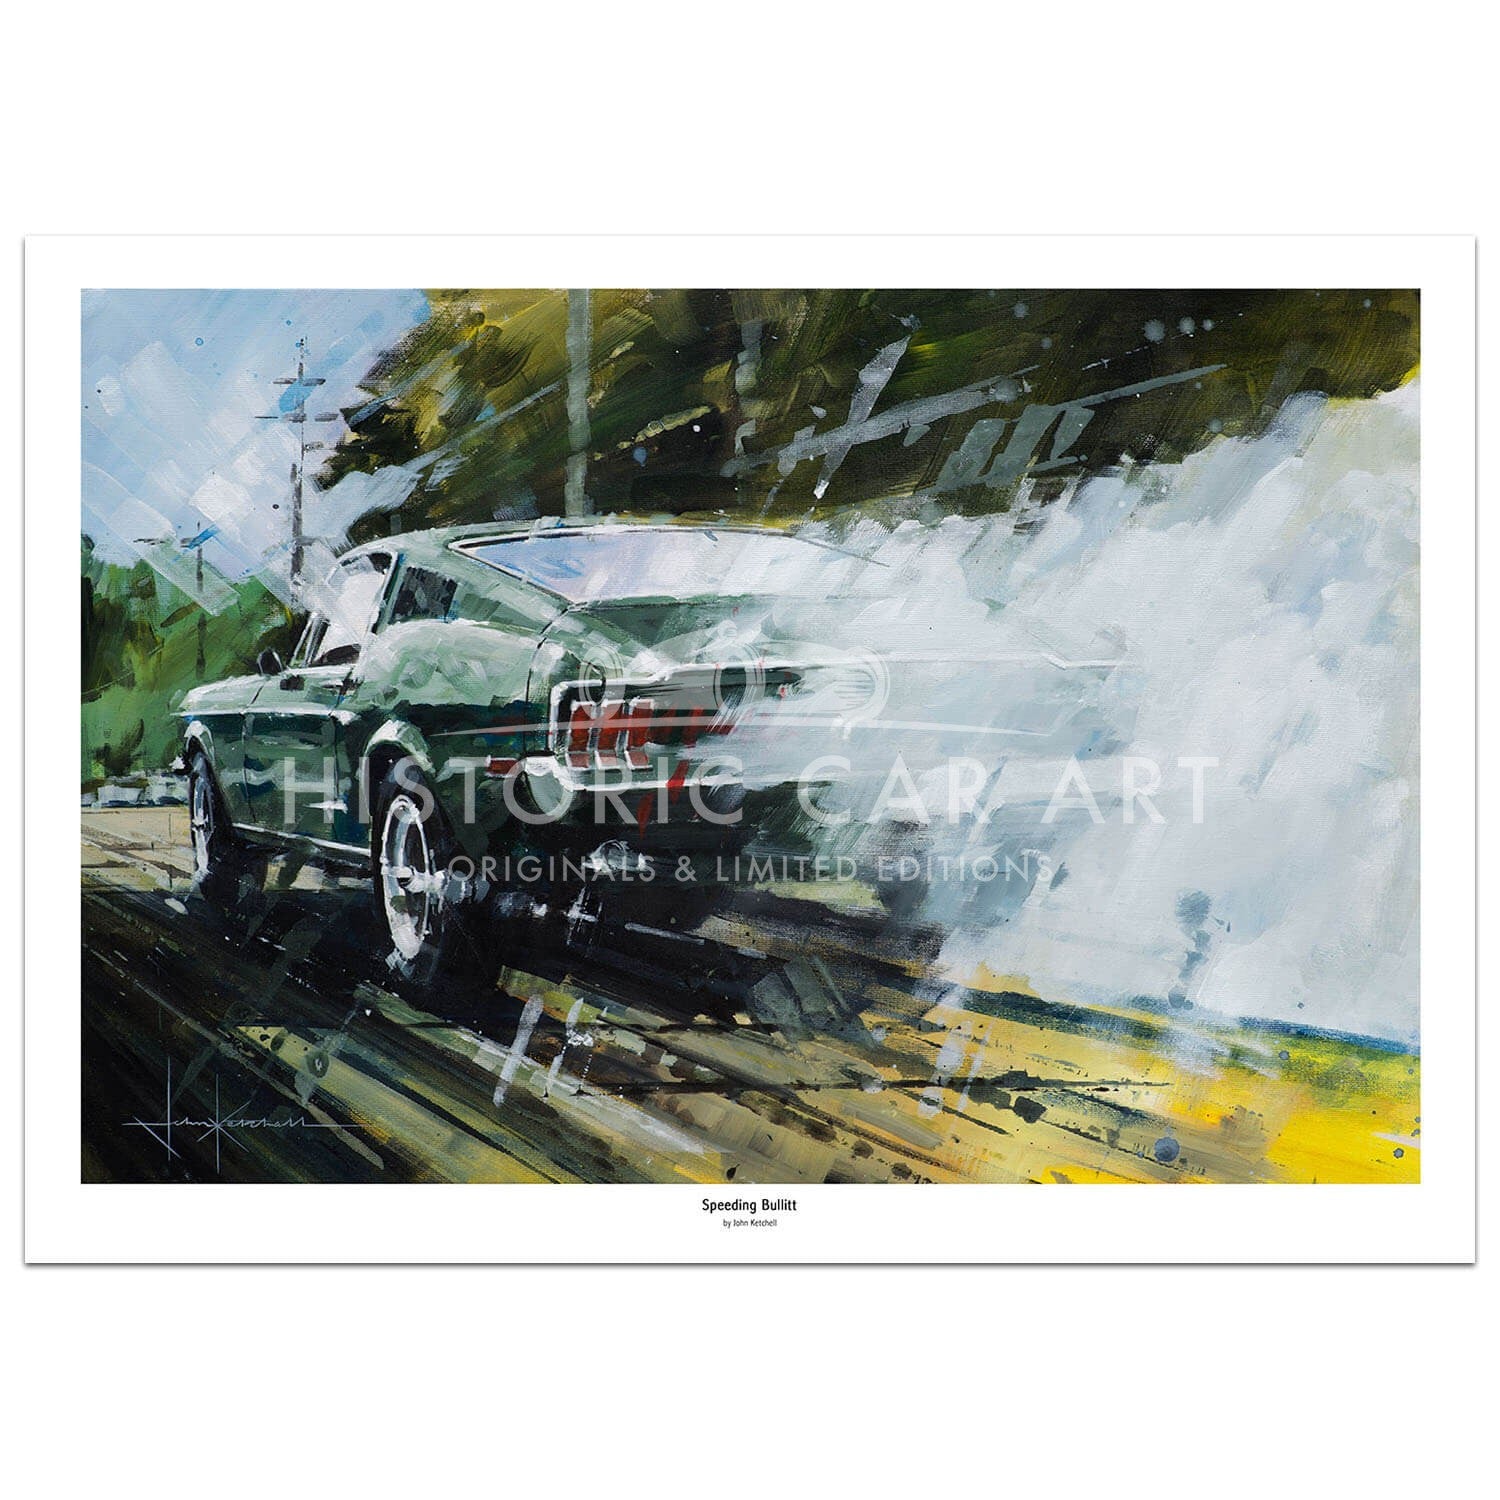 Speeding Bullit | McQueen | Mustang | Print